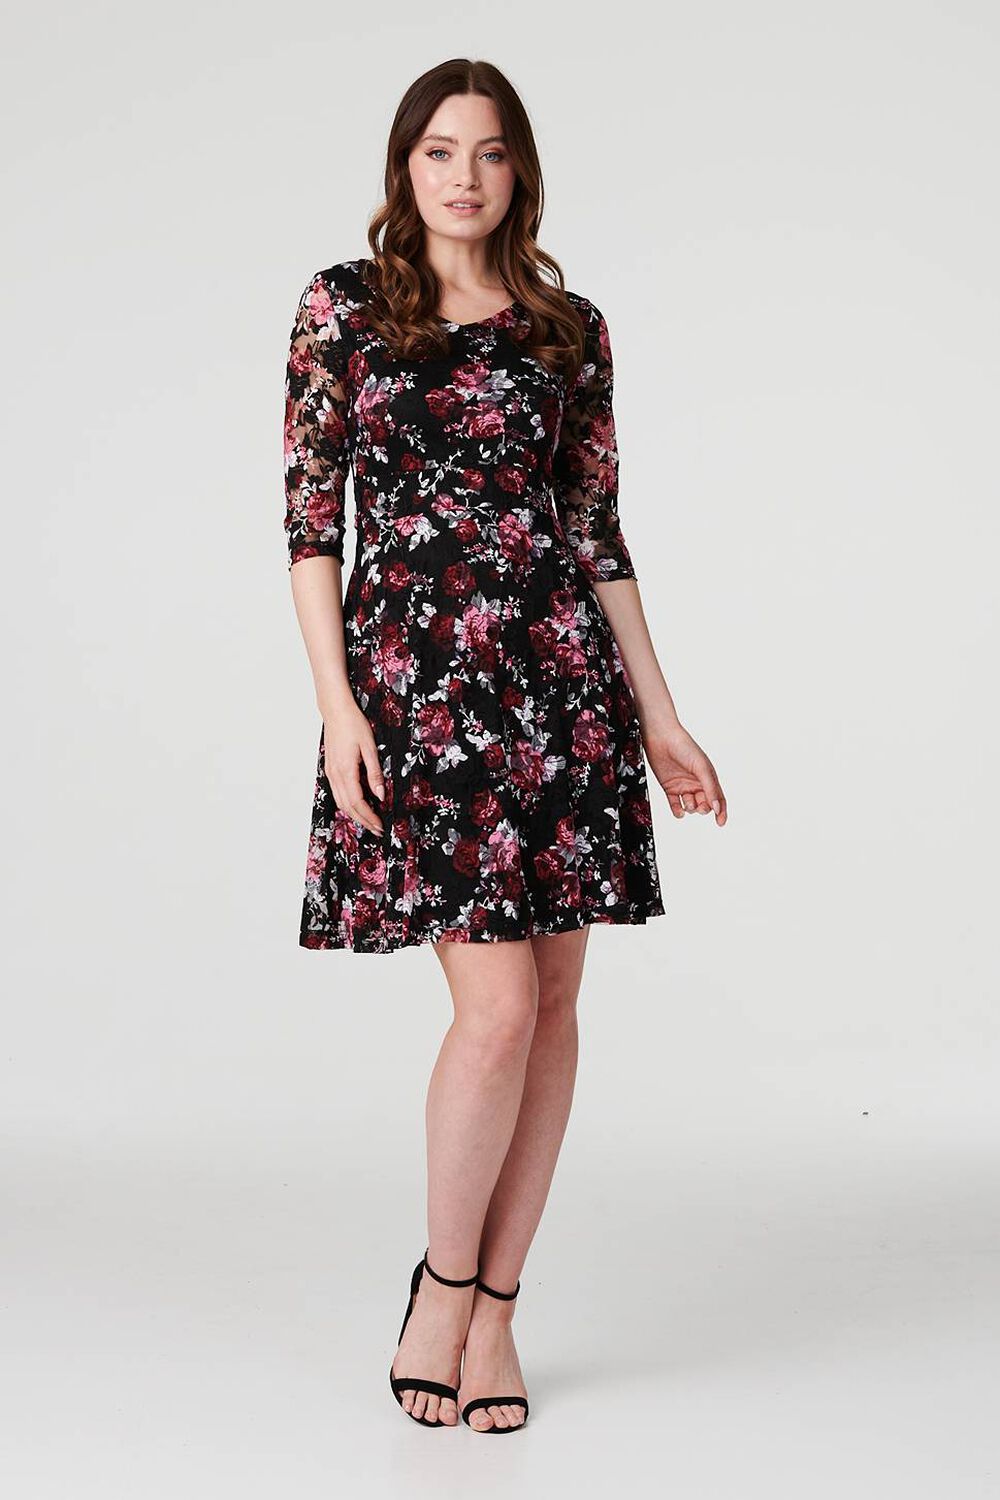 Izabel London Red - Rose Print Lace Overlay Short Dress, Size: 14